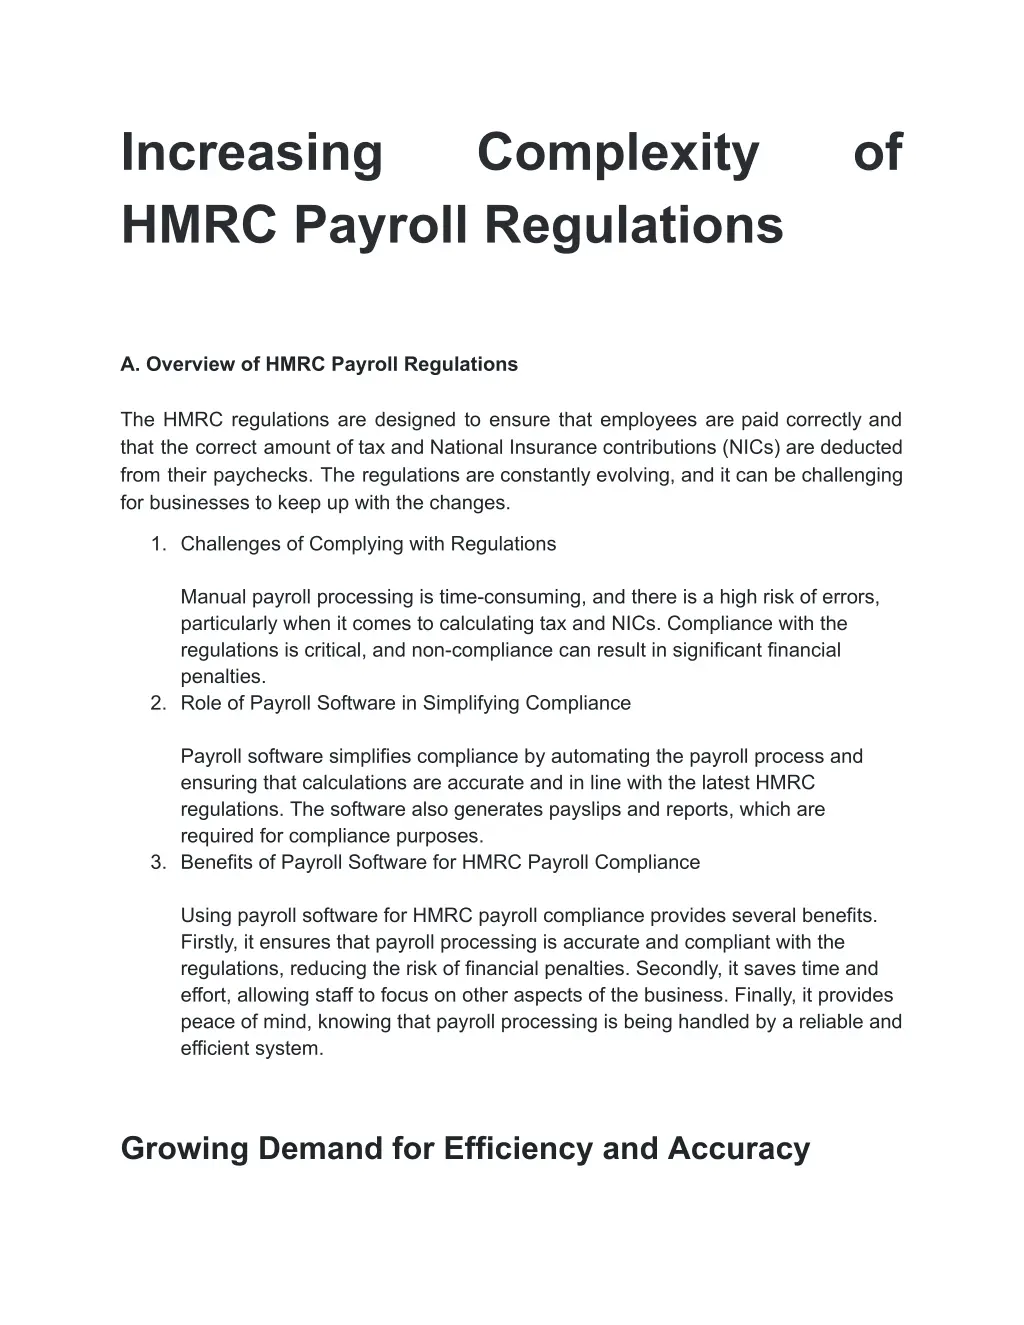 increasing hmrc payroll regulations